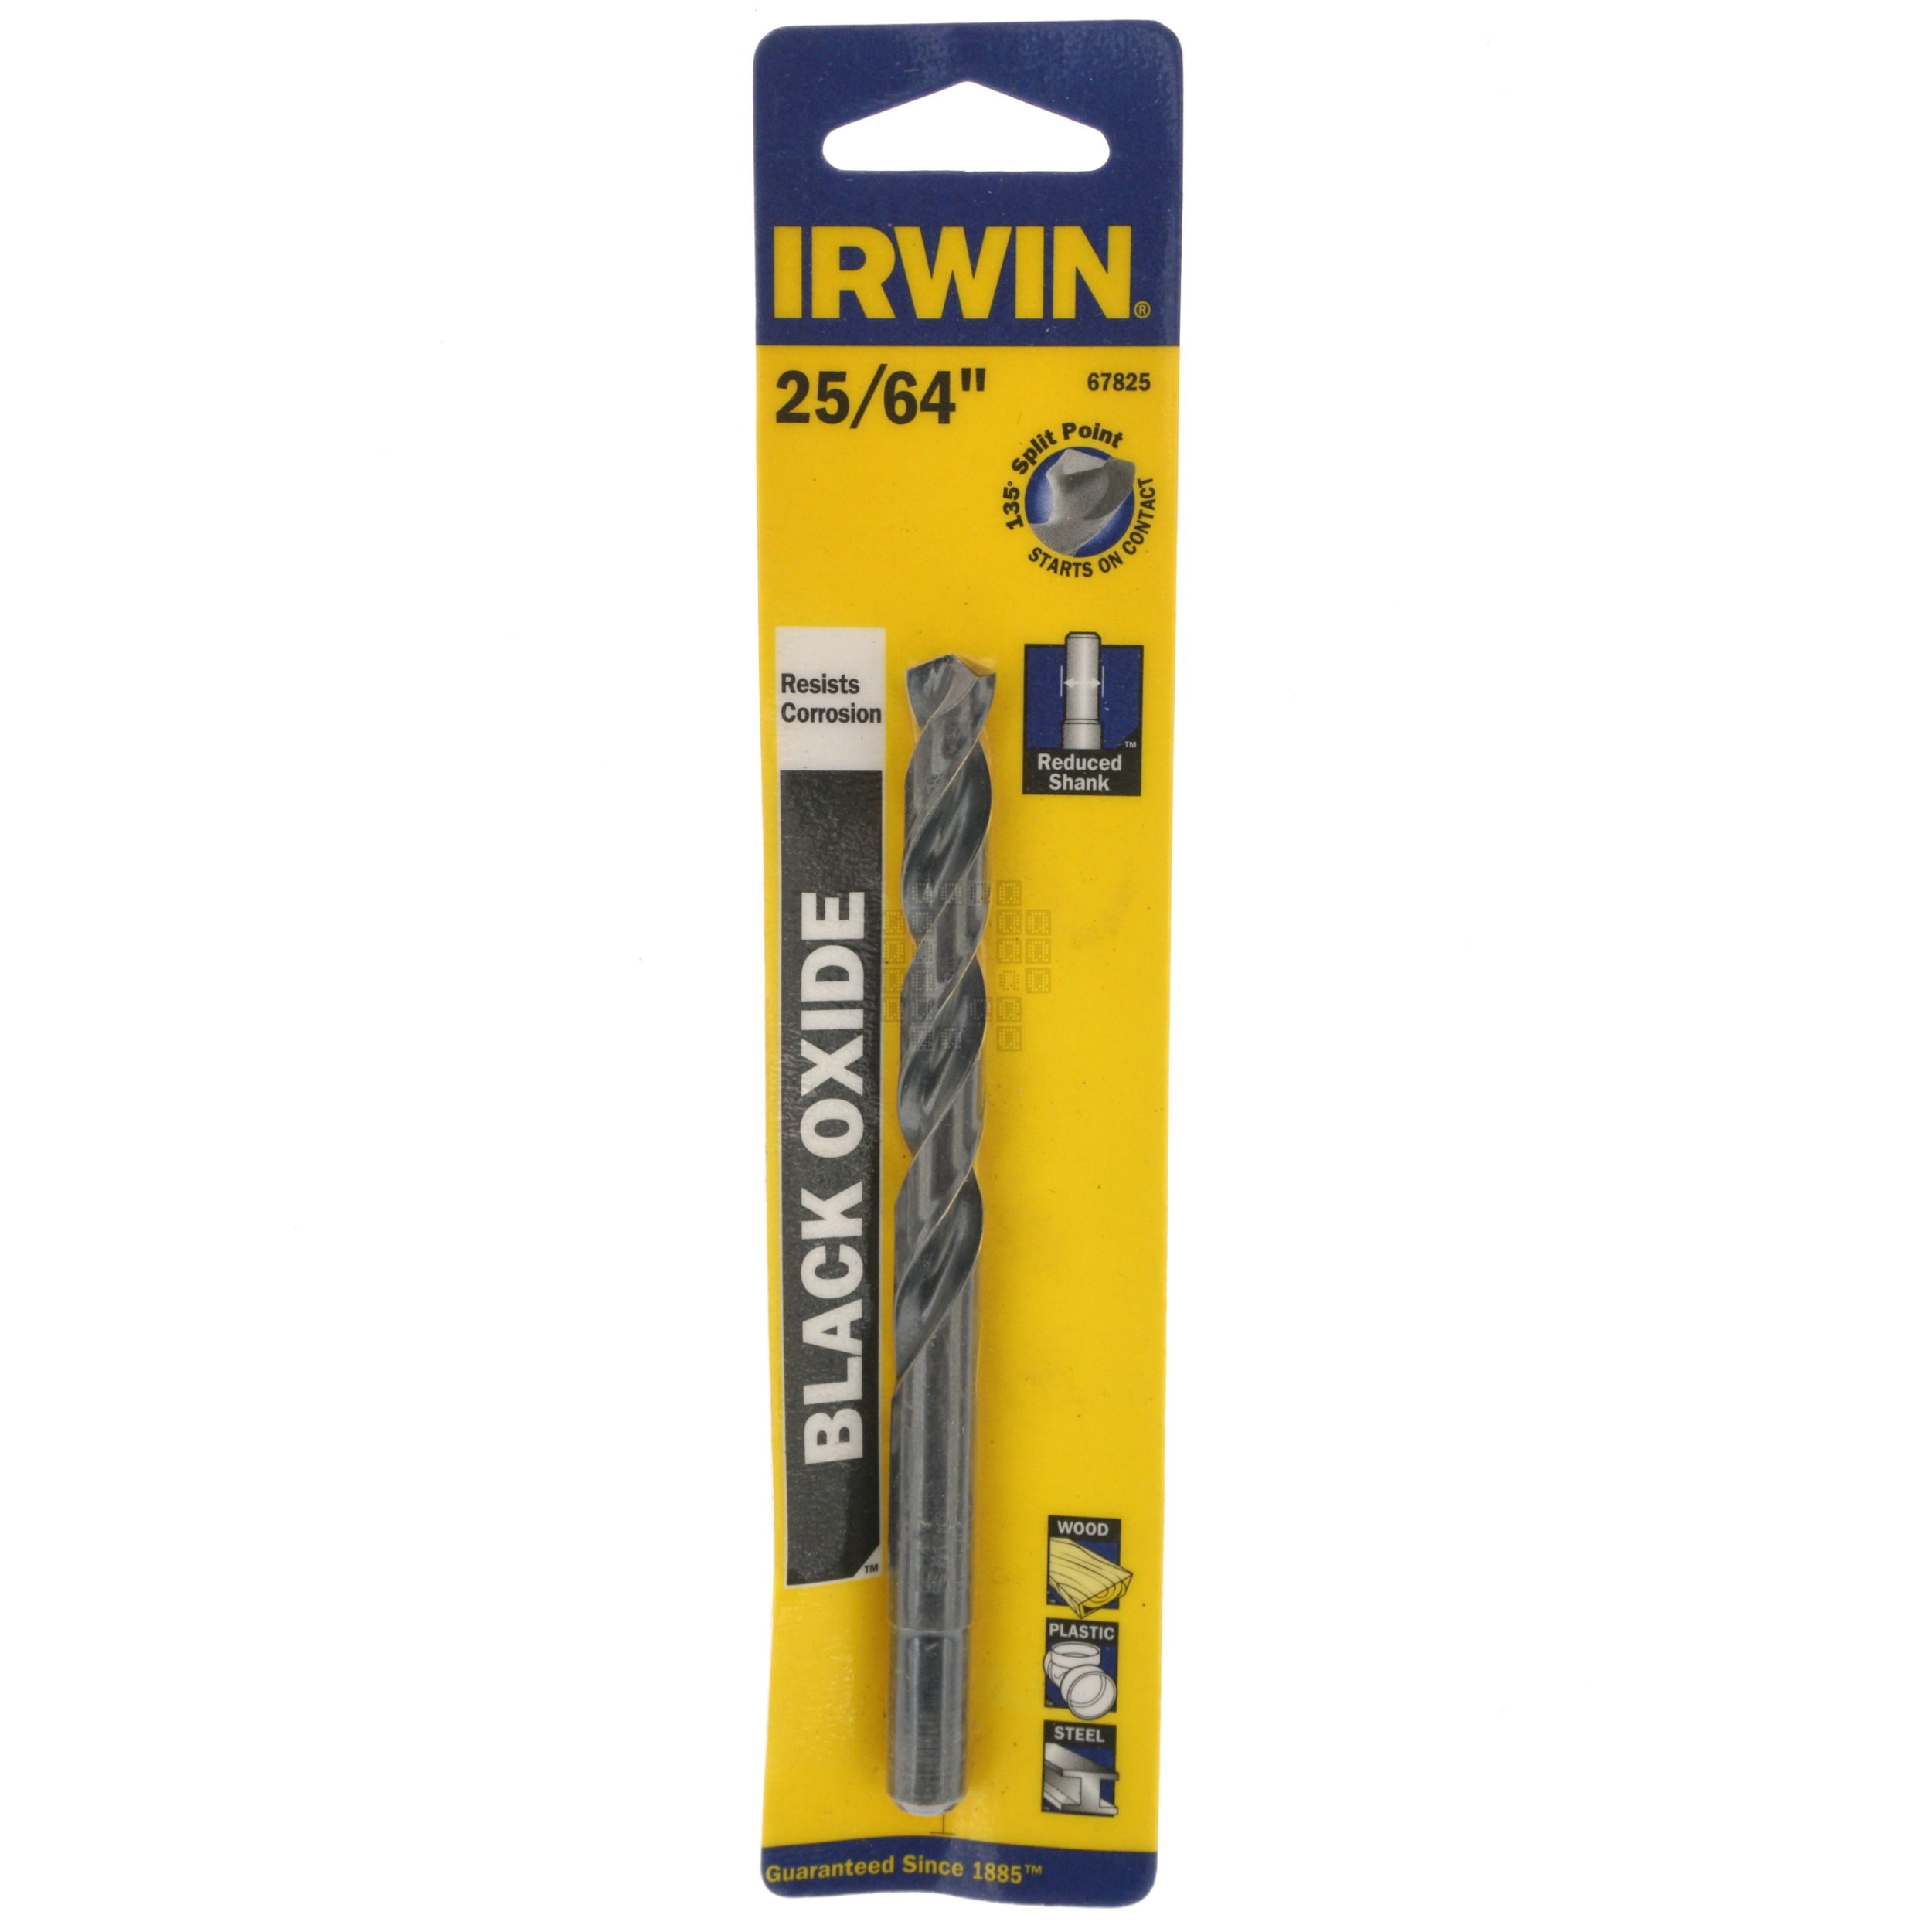 Irwin Industrial Tools 67825 25/64" Black Oxide 135° Split Point Reduced Shank Drill Bit